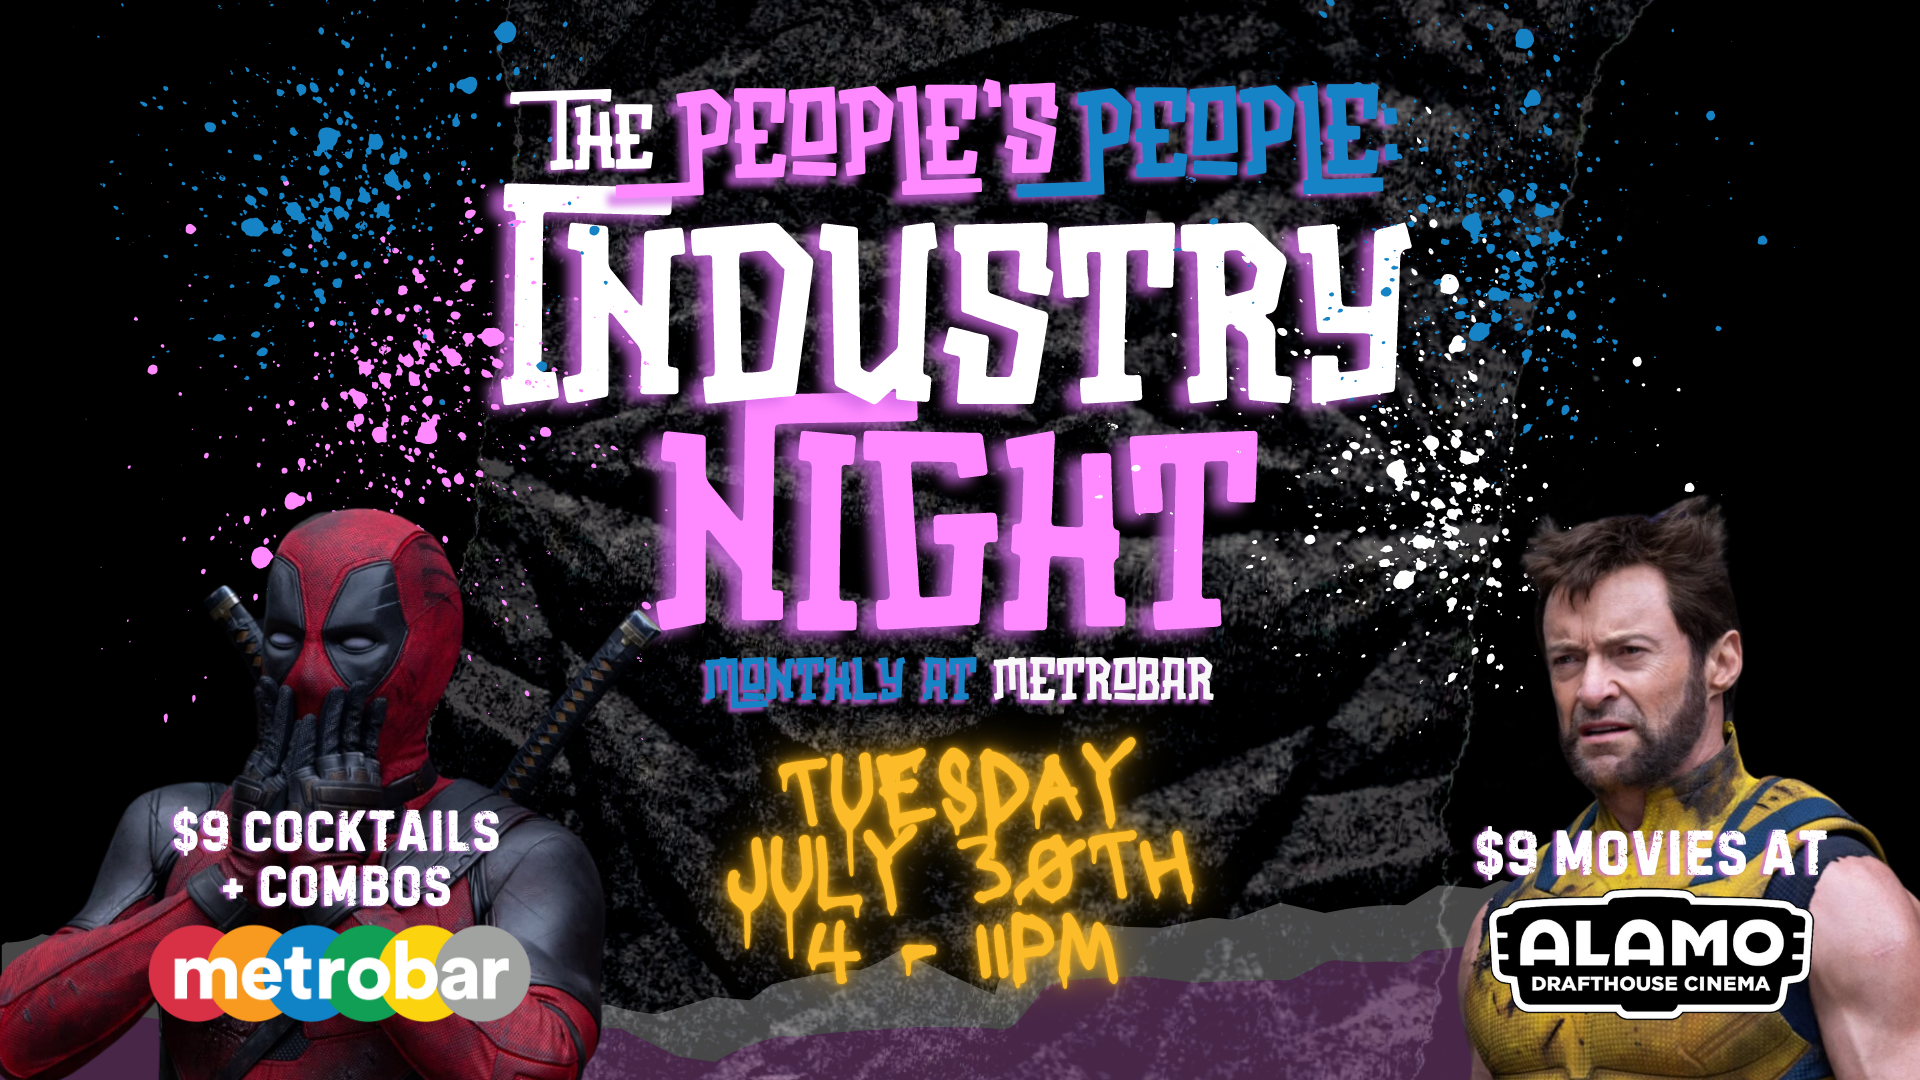 The People's People: Industry Night @ metrobar